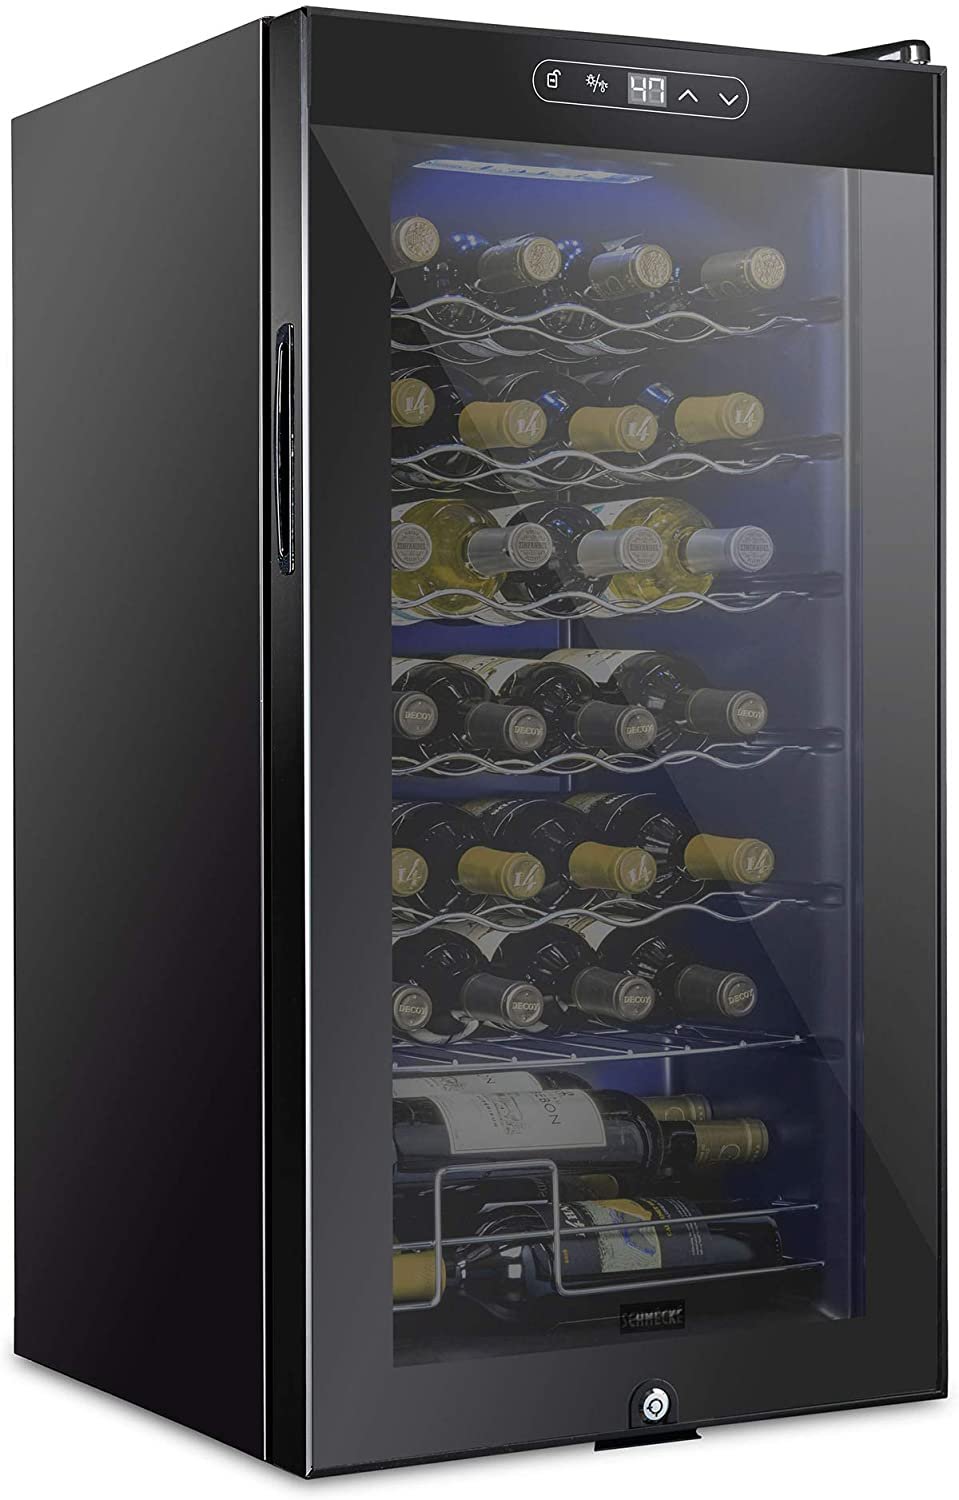 SCHMECKE 28 Bottle Compressor Wine Cooler Refrigerator